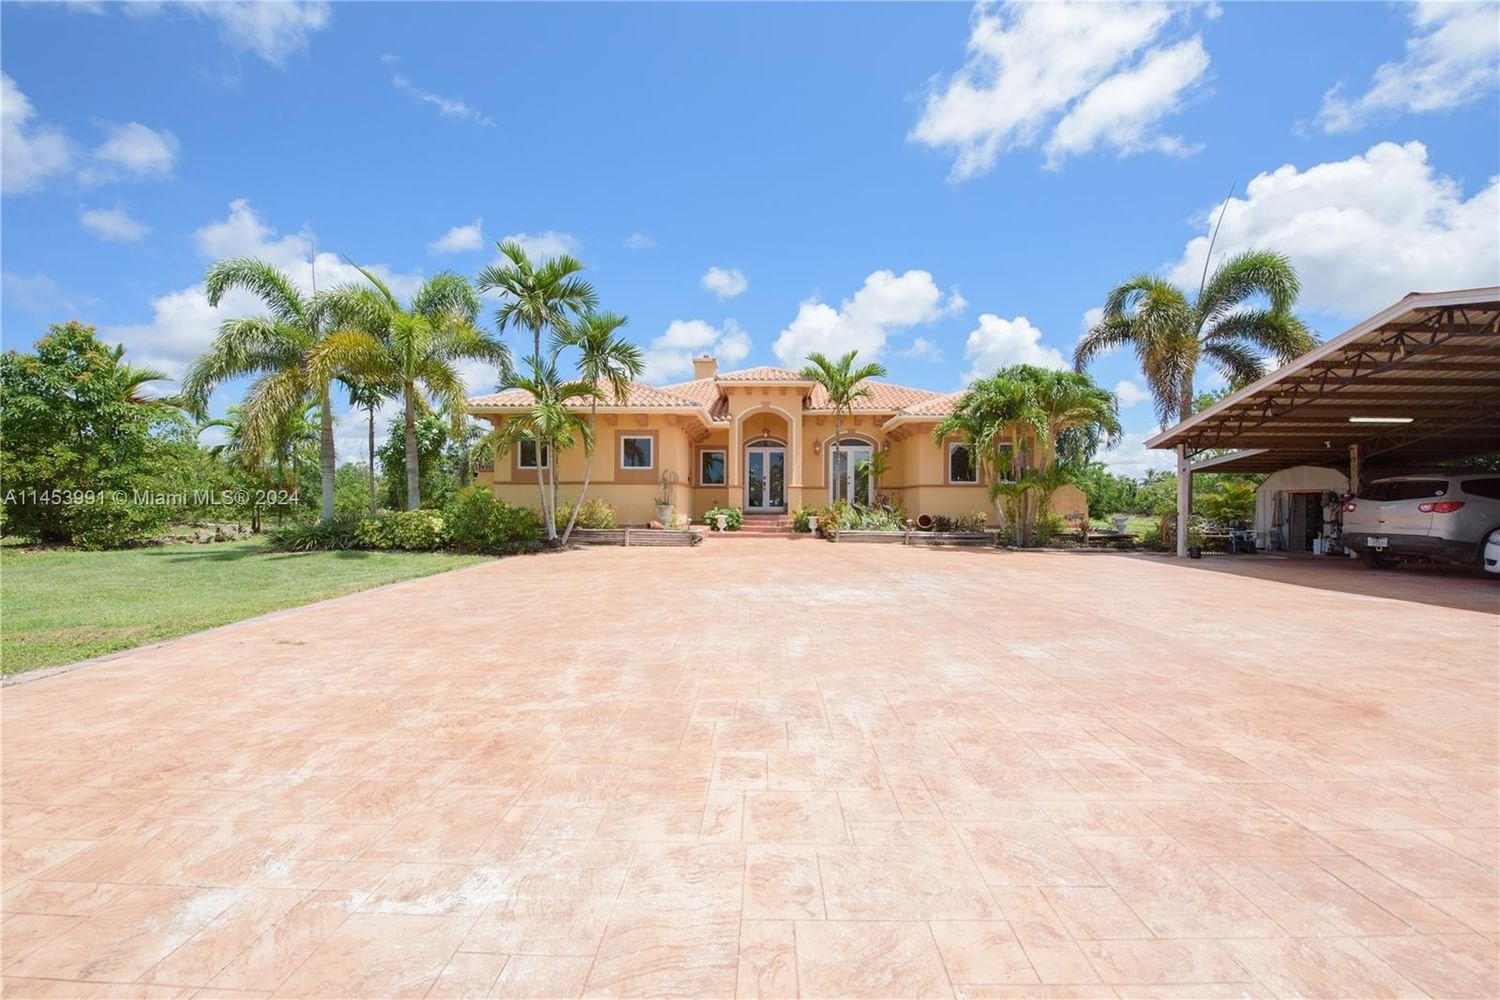 Real estate property located at 20401 184th St, Miami-Dade County, North Redland, Miami, FL